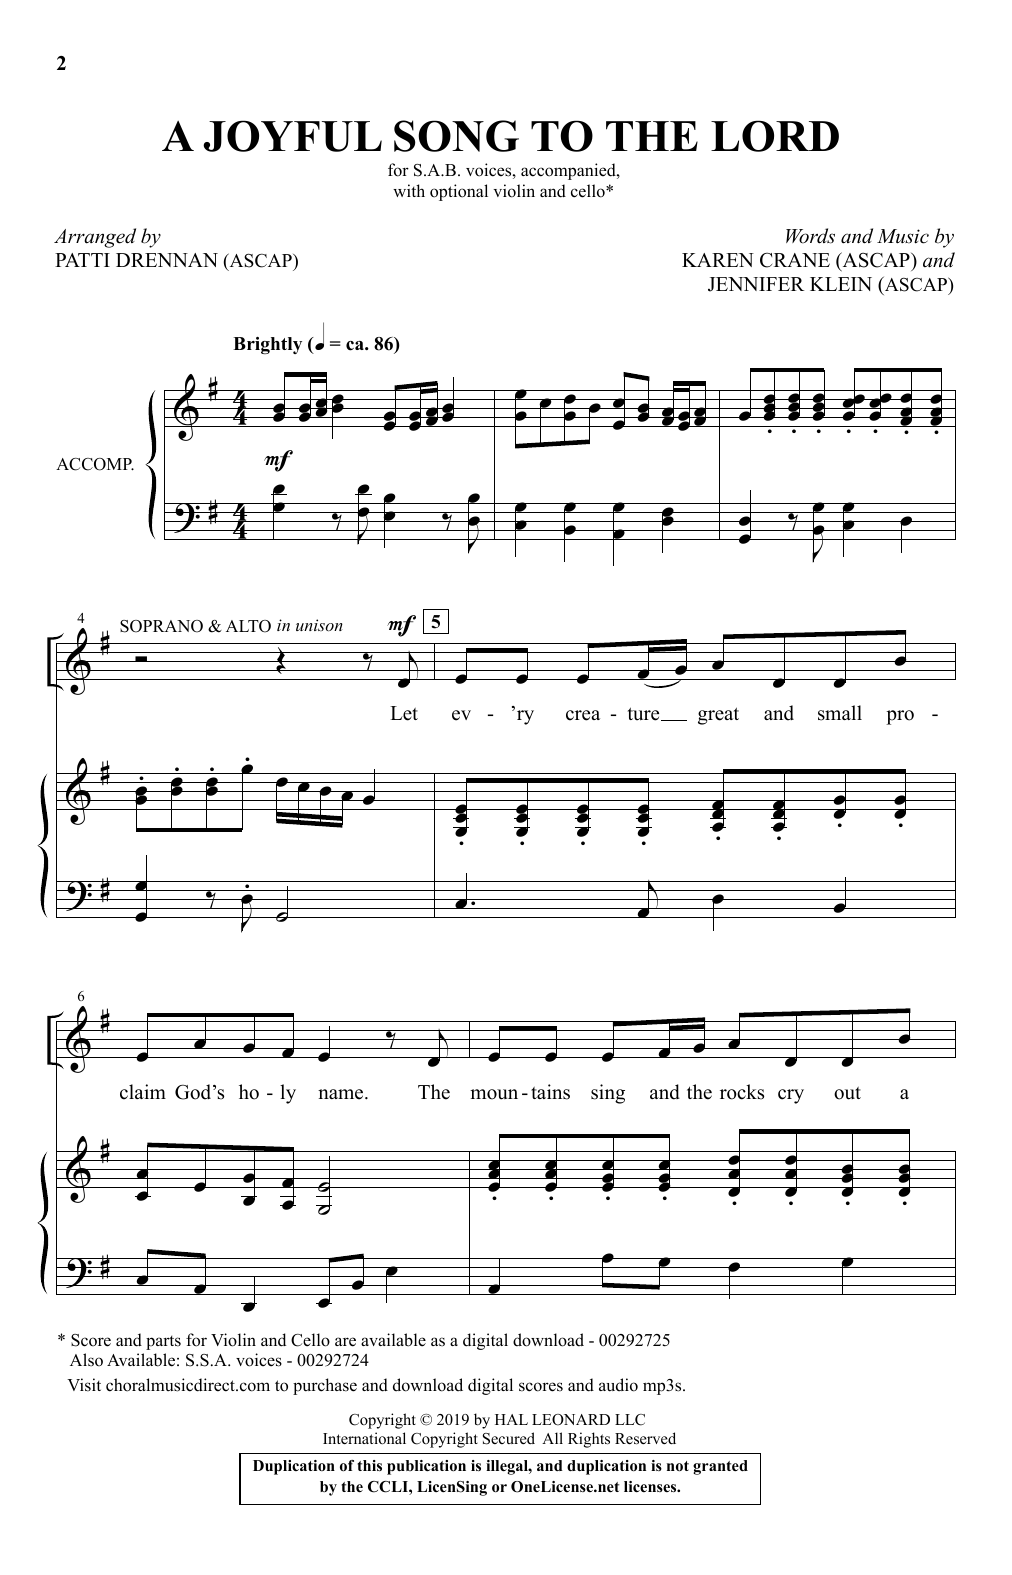 Download Karen Crane & Jennifer Klein A Joyful Song To The Lord (arr. Patti Drennan) Sheet Music and learn how to play SAB Choir PDF digital score in minutes